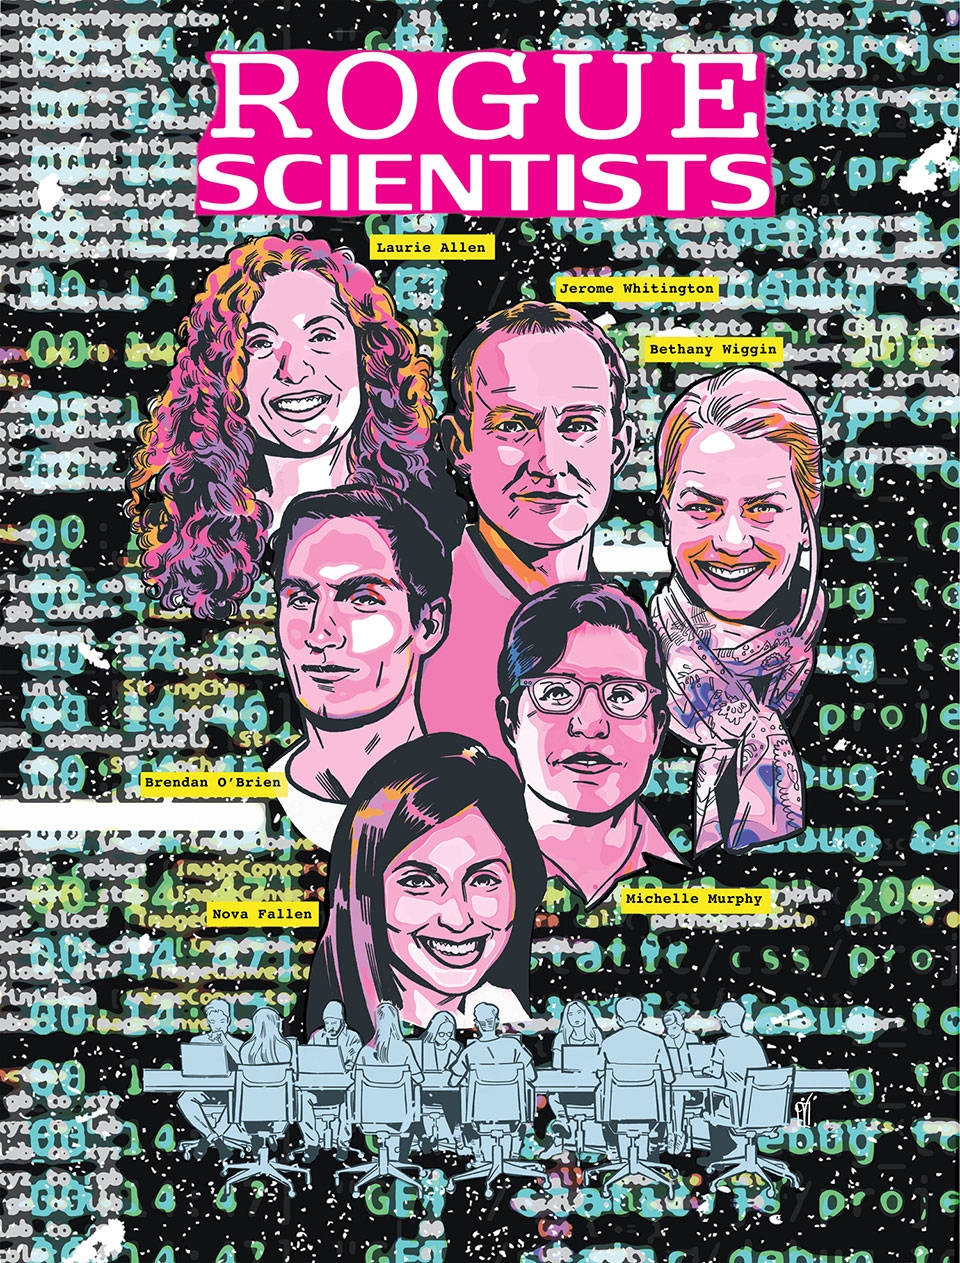 Rogue Scientists who saved environmental data. Artwork by Valentine DeLandro